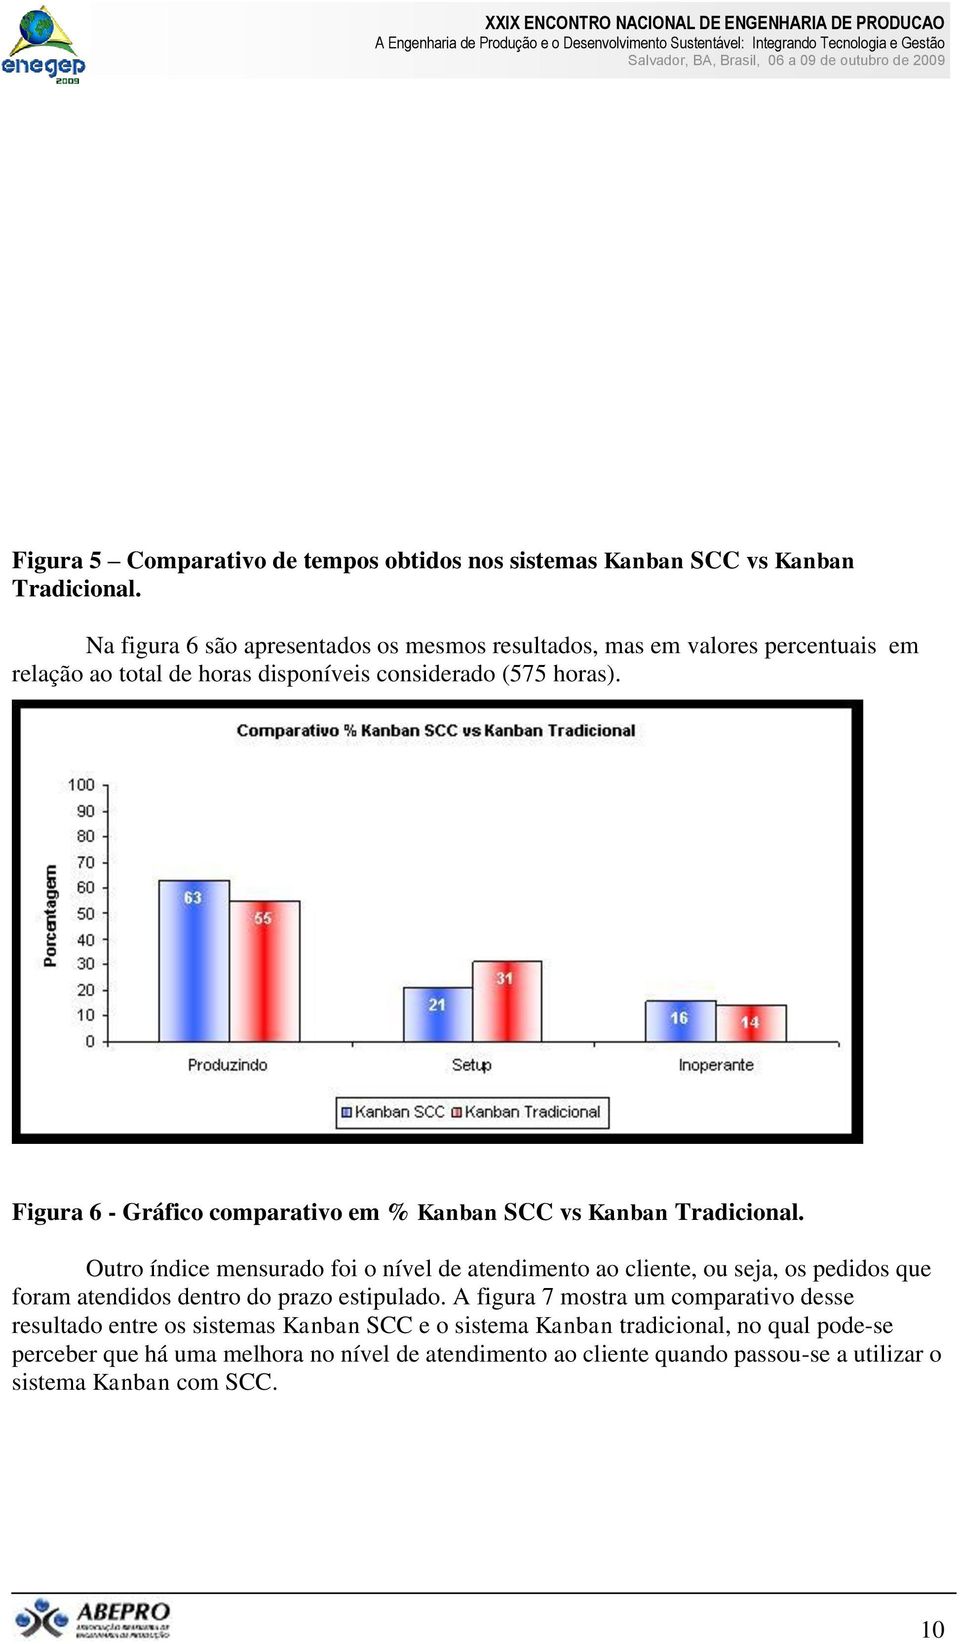 Figura 6 - Gráfico comparativo em % Kanban SCC vs Kanban Tradicional.